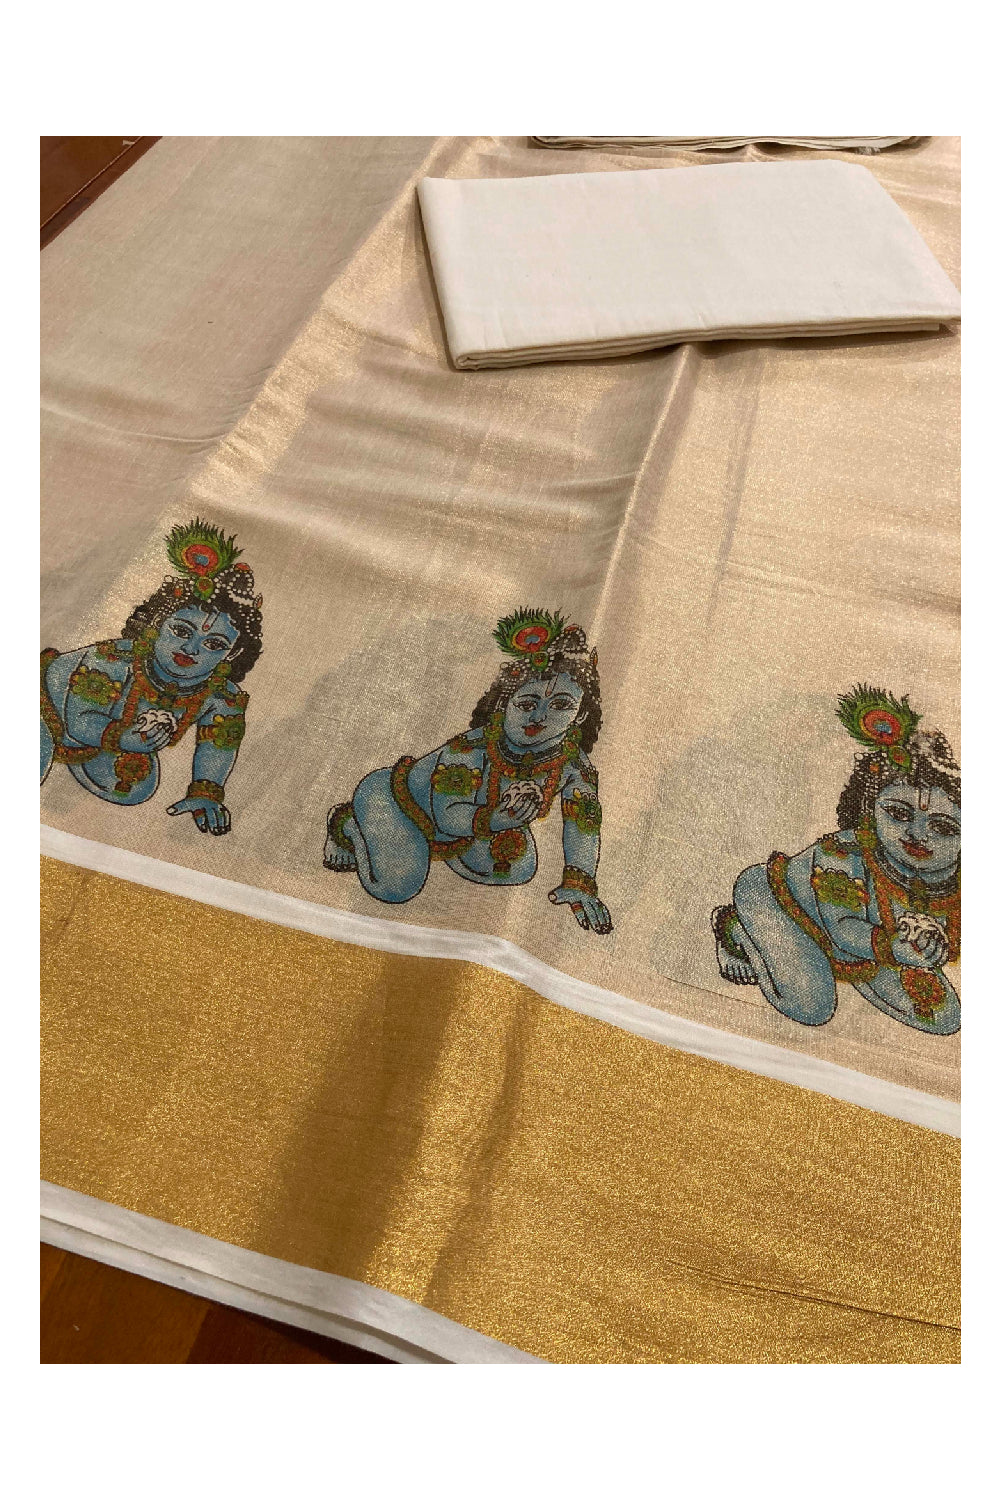 Kerala Tissue Kasavu Churidar Material with Baby Krishna Mural Design